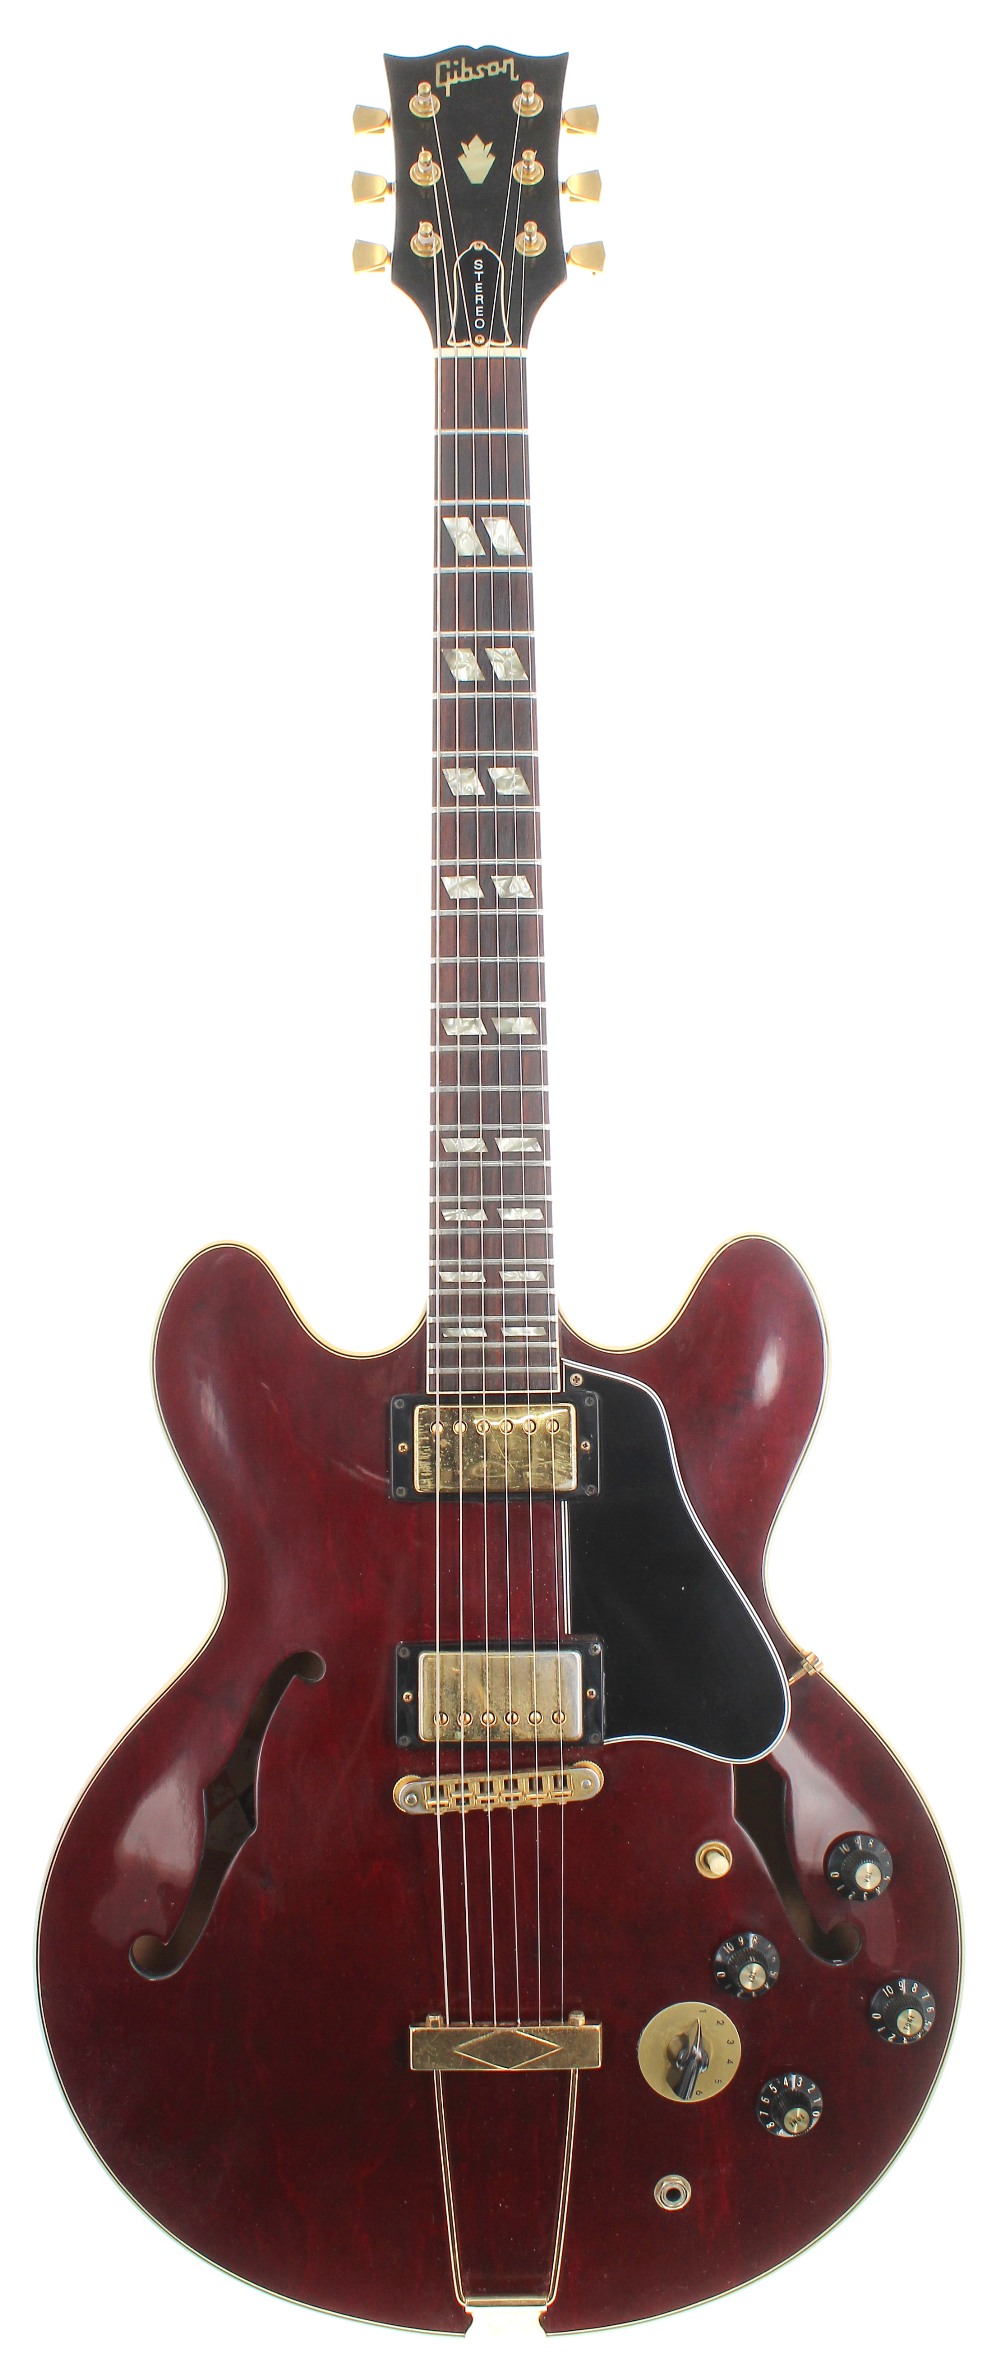 1981 Gibson ES-345 TD semi-hollow body electric guitar, made in USA, ser. no. 8xxx1xx4; Finish: wine